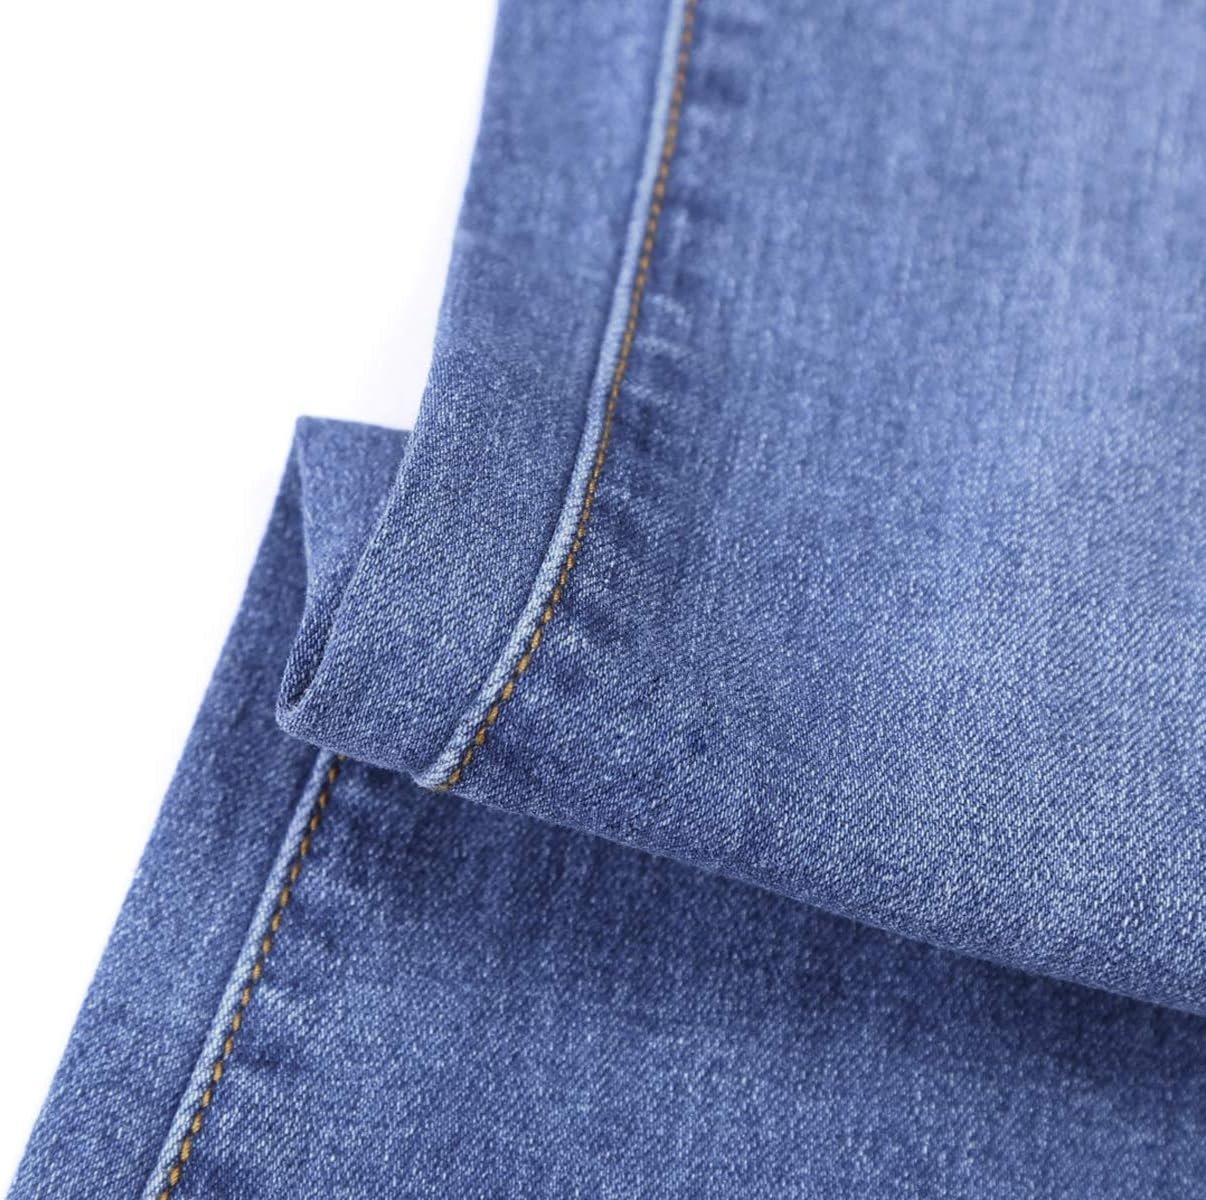 Sidefeel Women Flare Jeans Bell Bottom Mid Rise Fitted Denim Pants Medium Blue Size 8